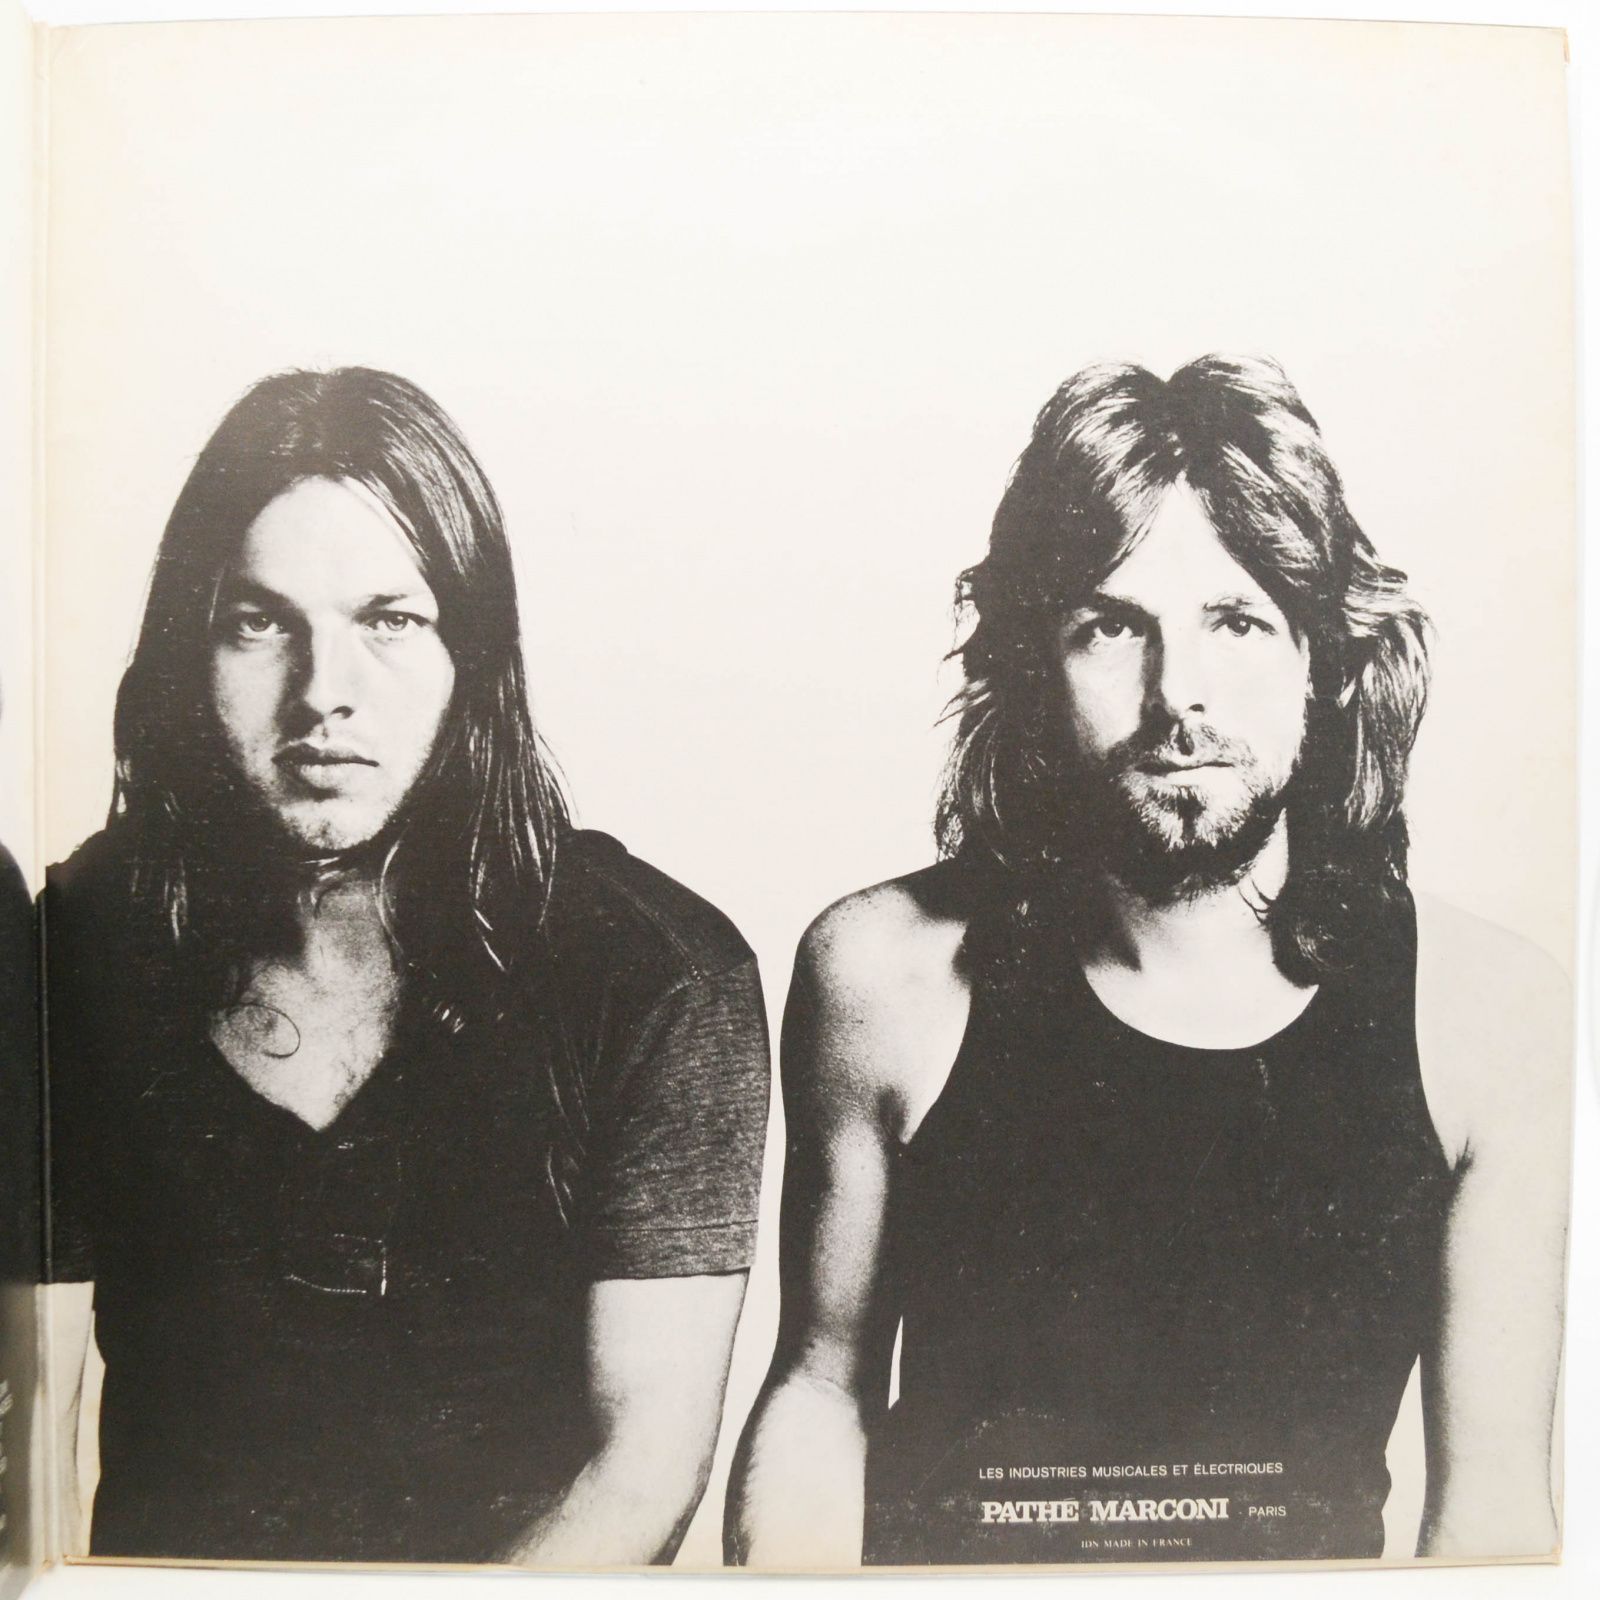 Pink Floyd — Meddle, 1971